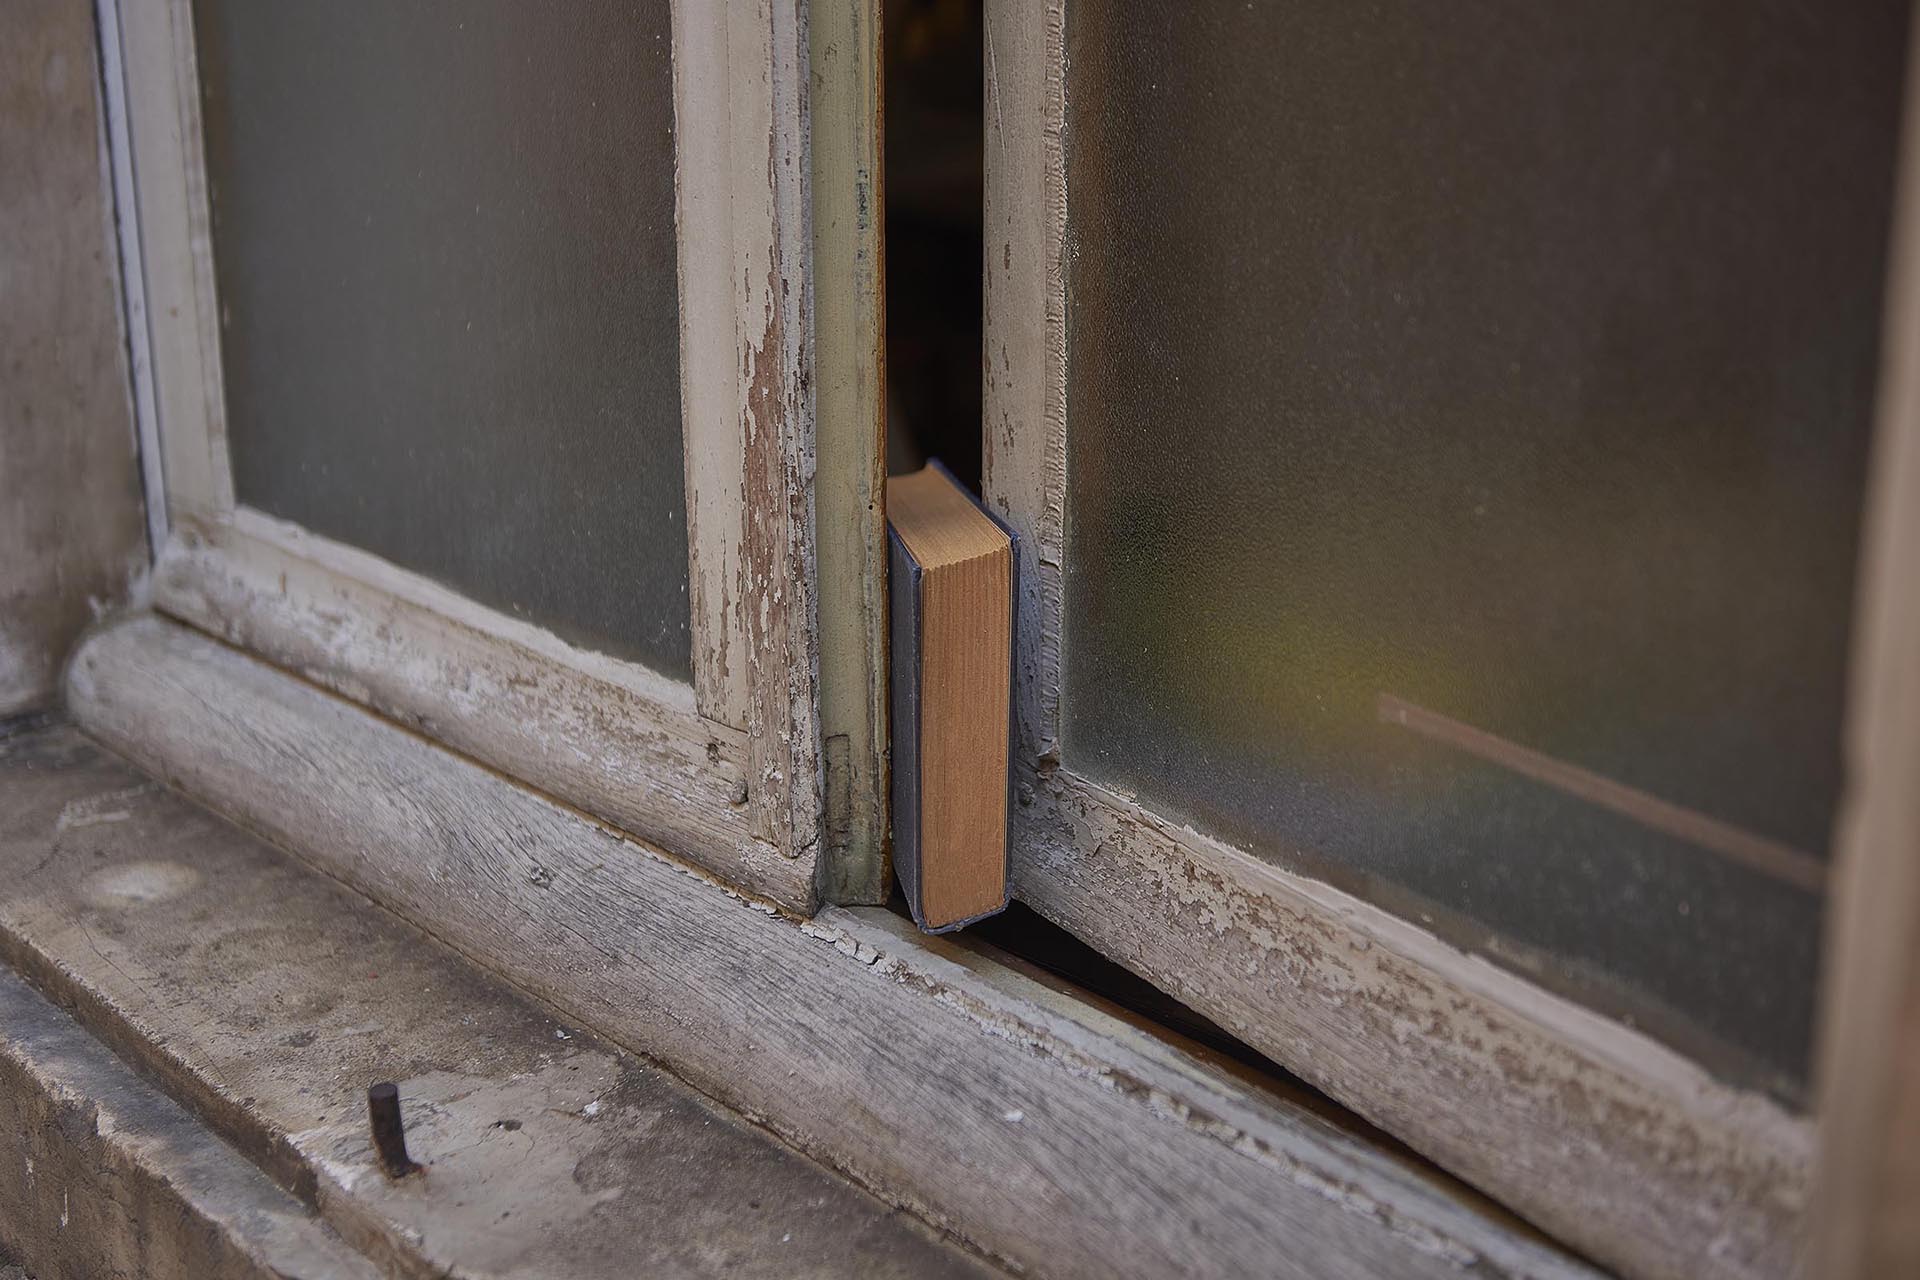 Random objects and places. A book keeps a window slightly ajar.